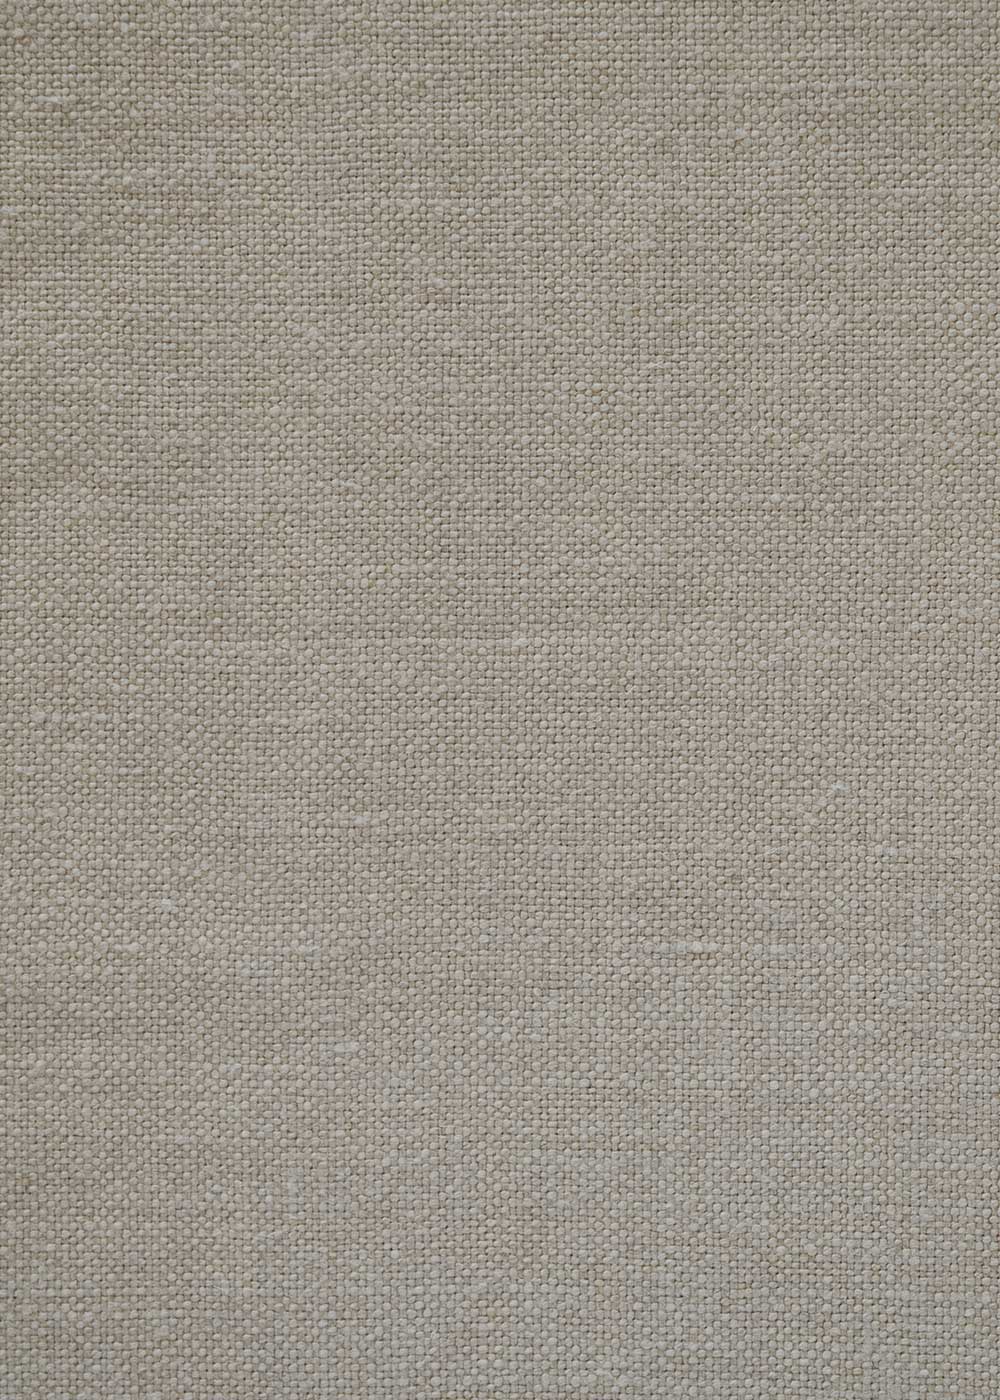 plain linen fabric in light beige